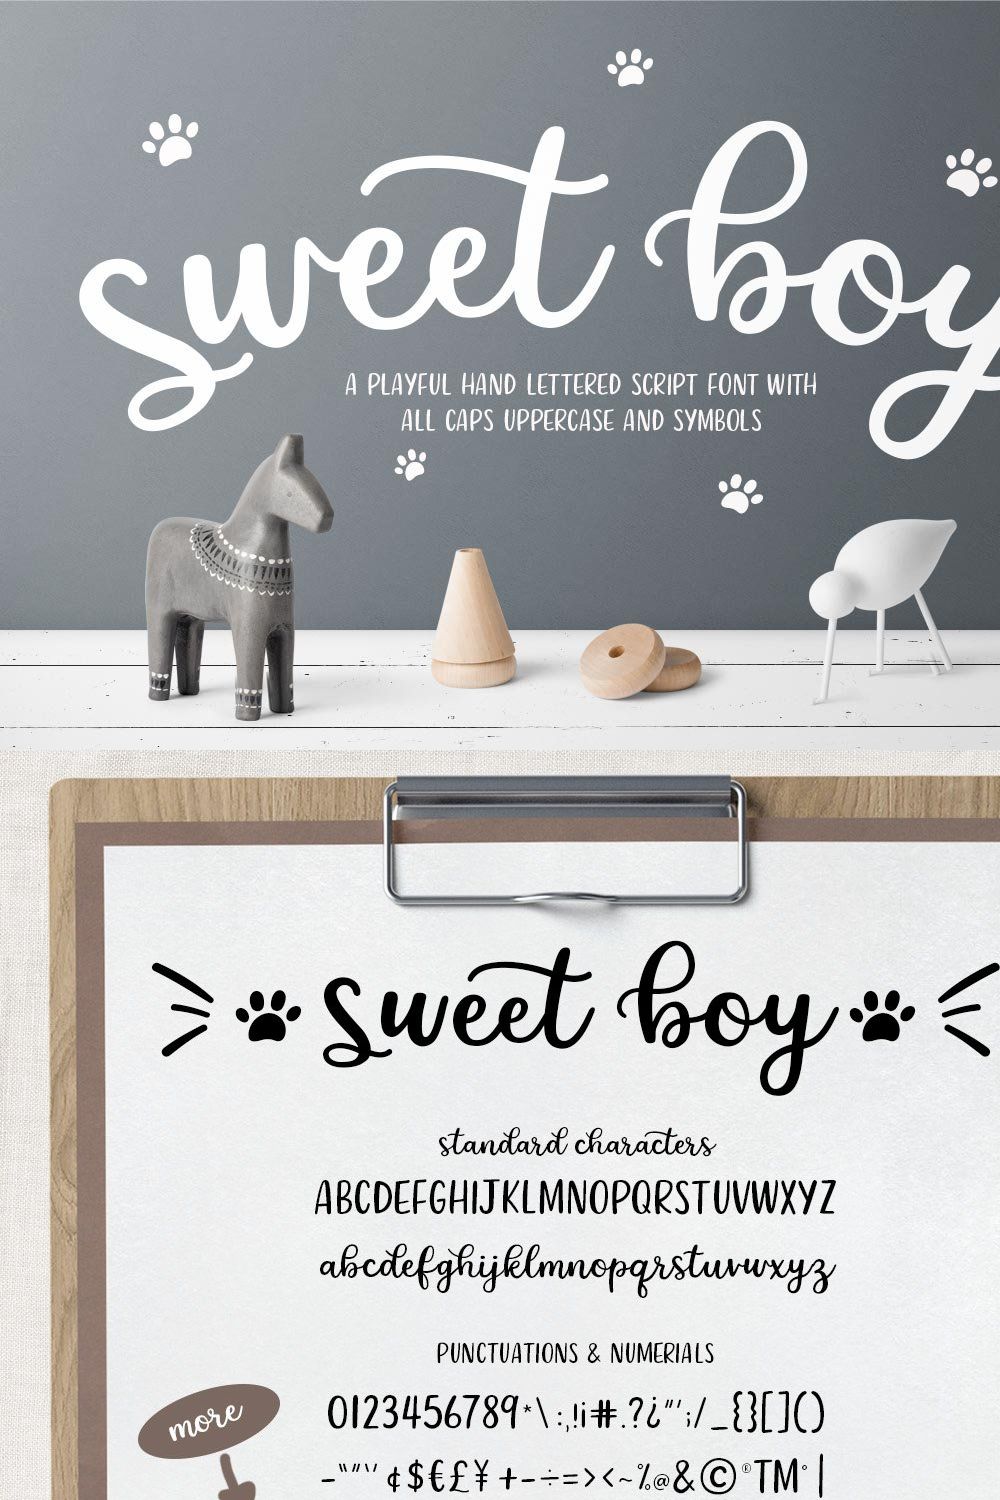 Sweet Boy Script Font pinterest preview image.